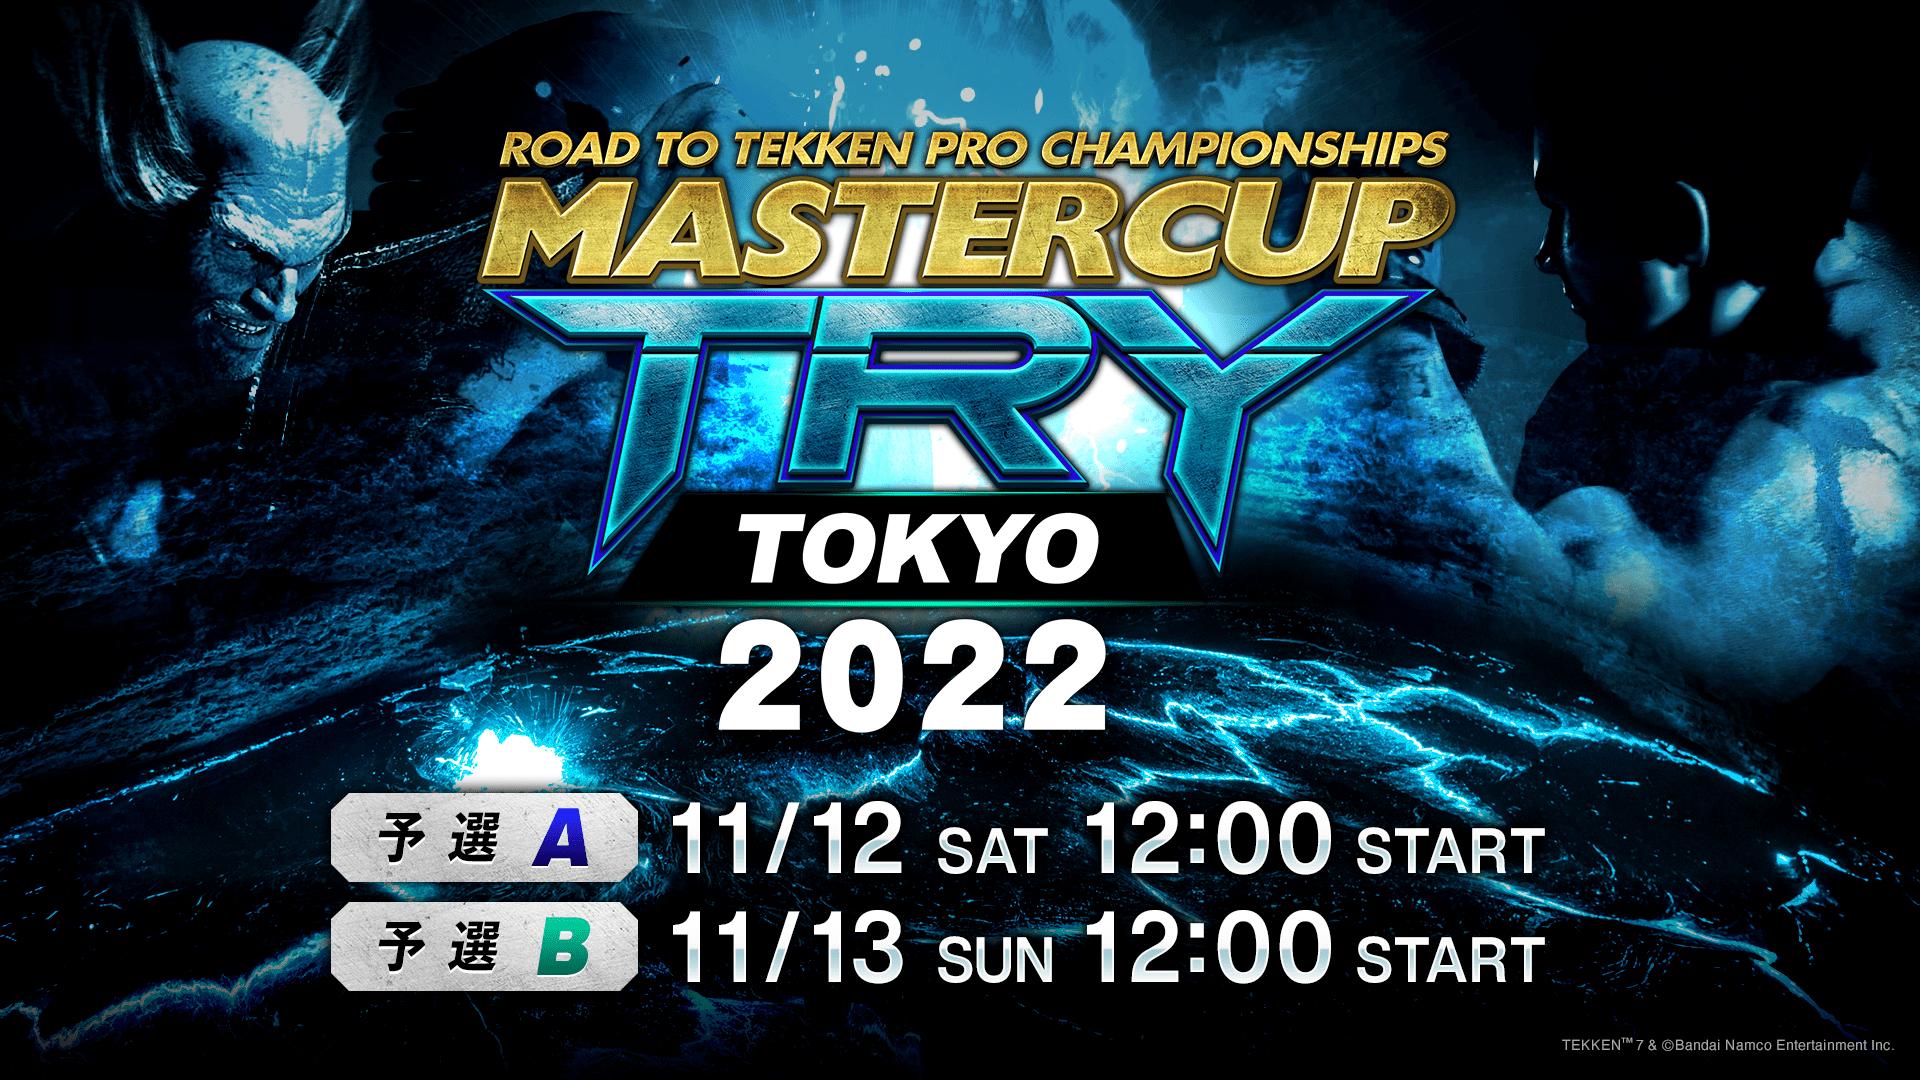 MASTERCUP TRY TOKYO 2022の見出し画像